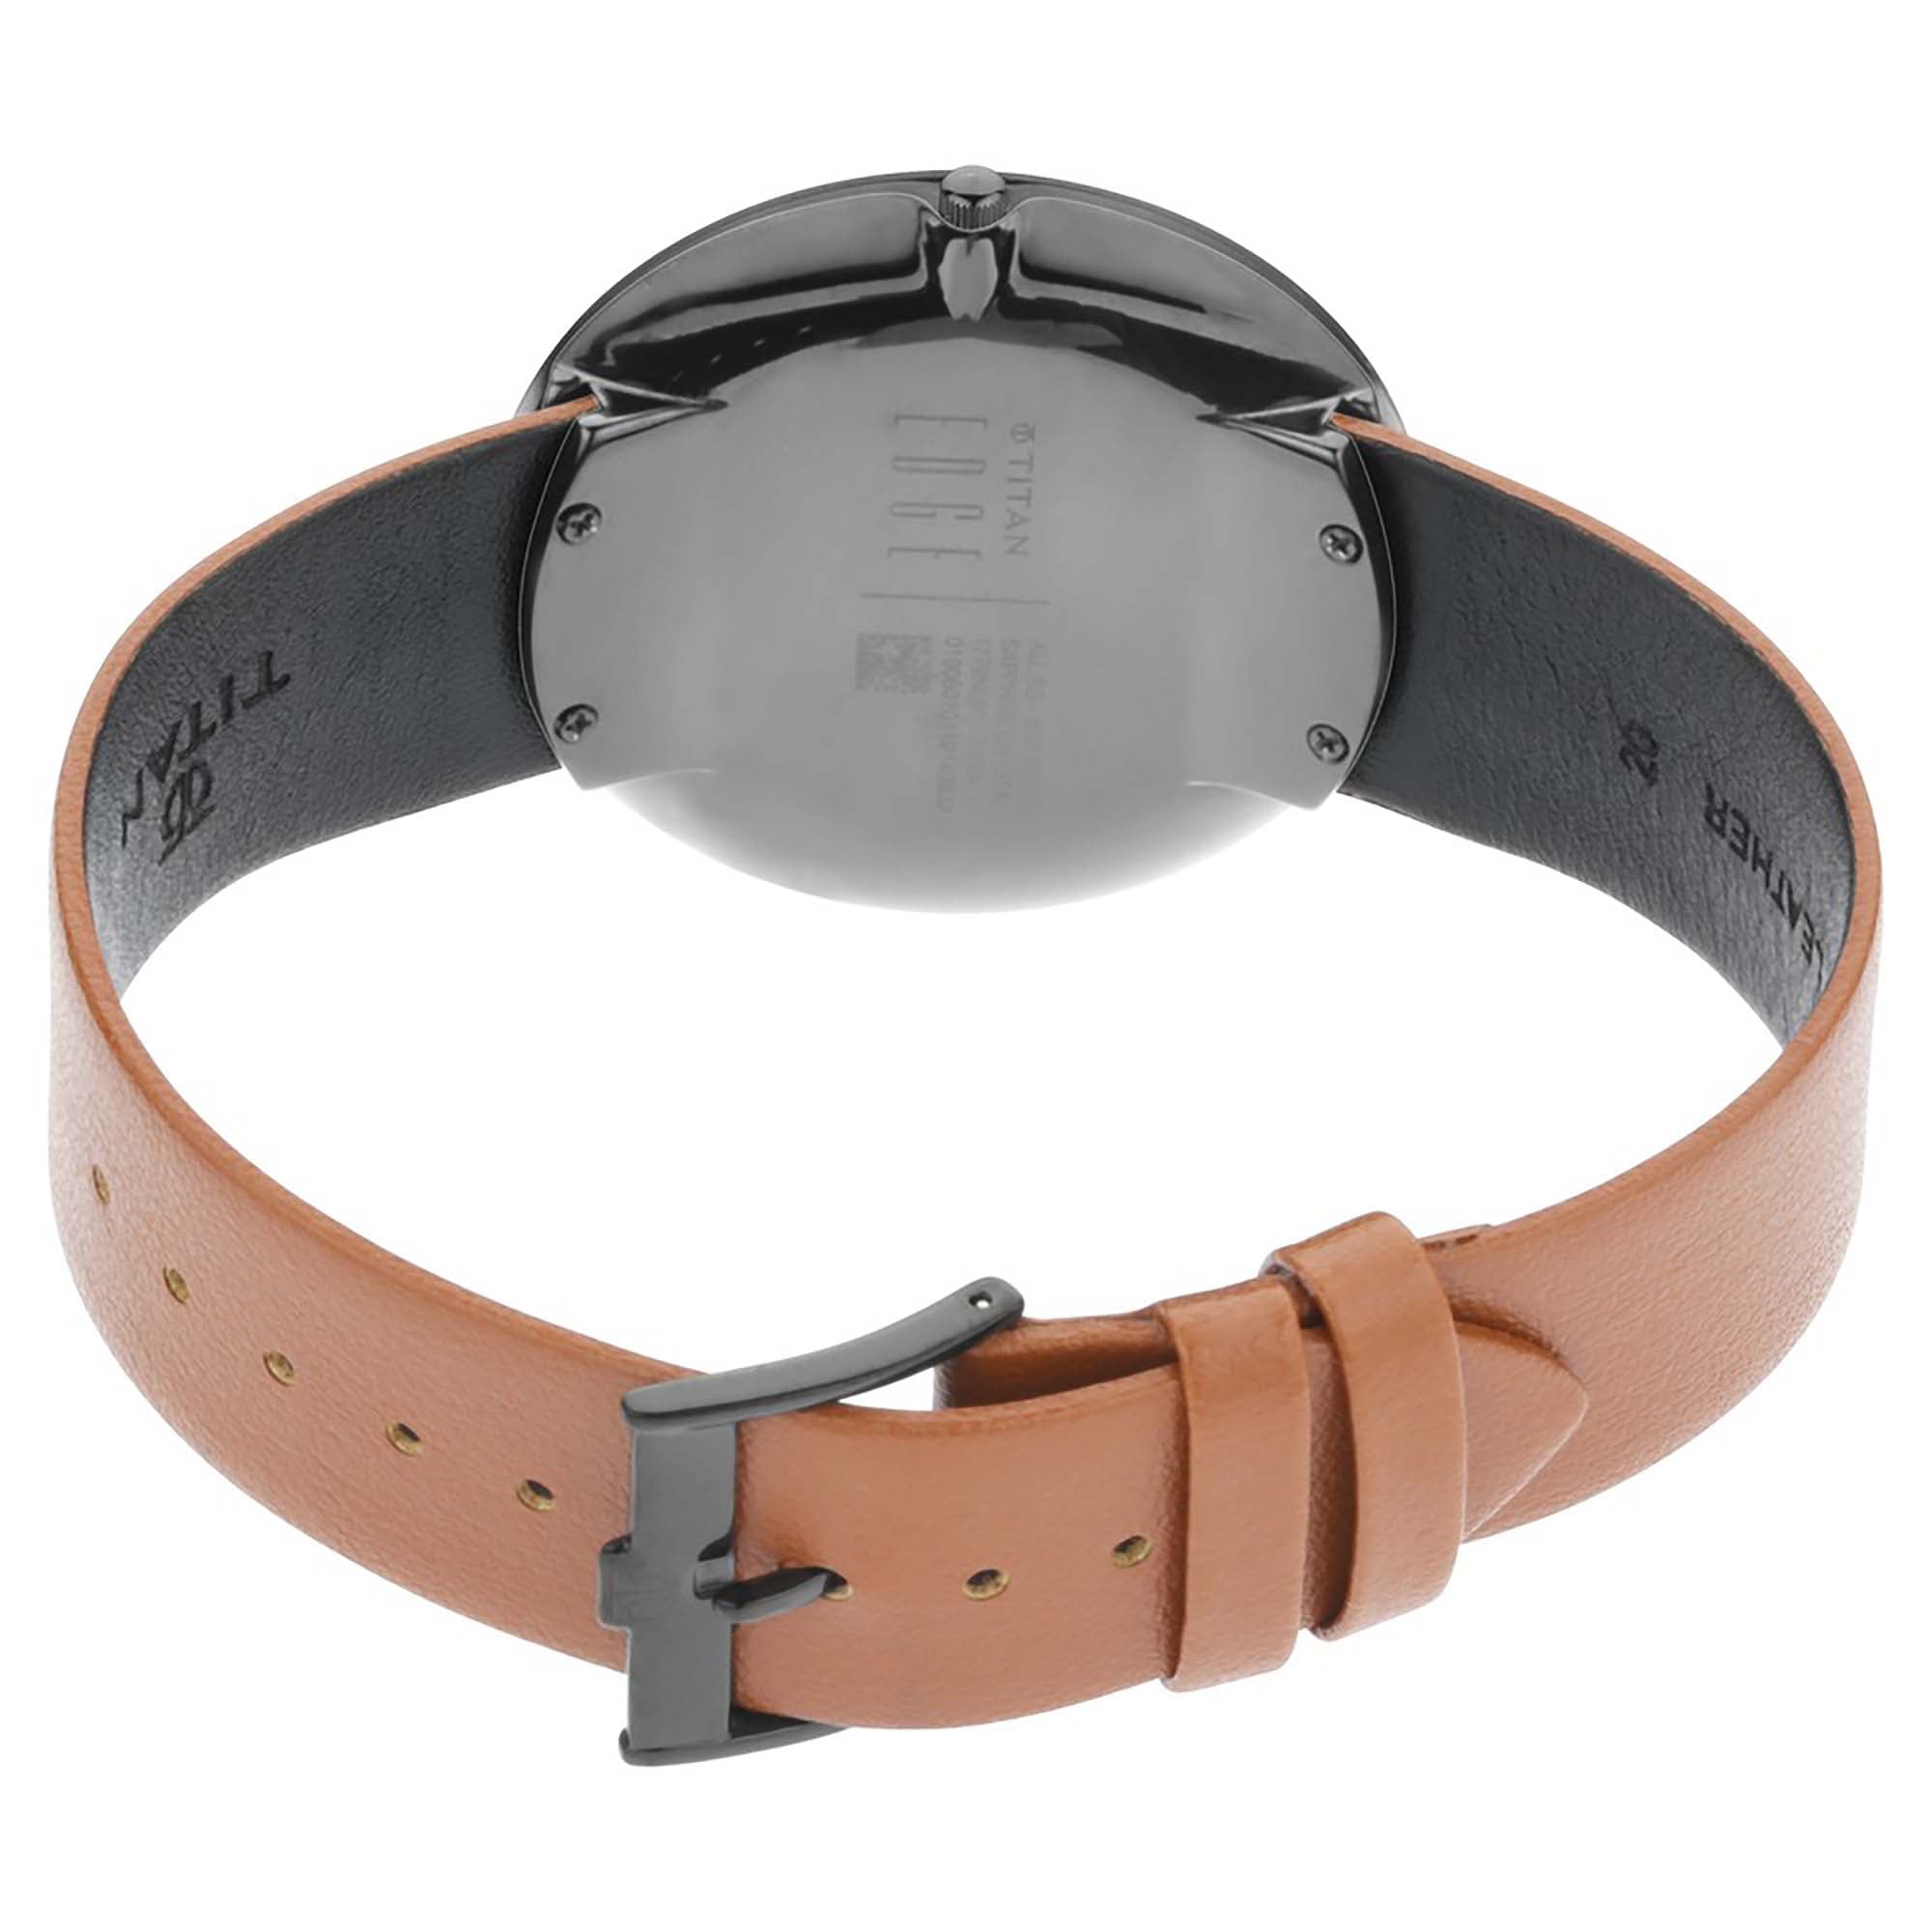 Titan Edge Zen Anthracite Dial Analog Leather Strap watch for Men